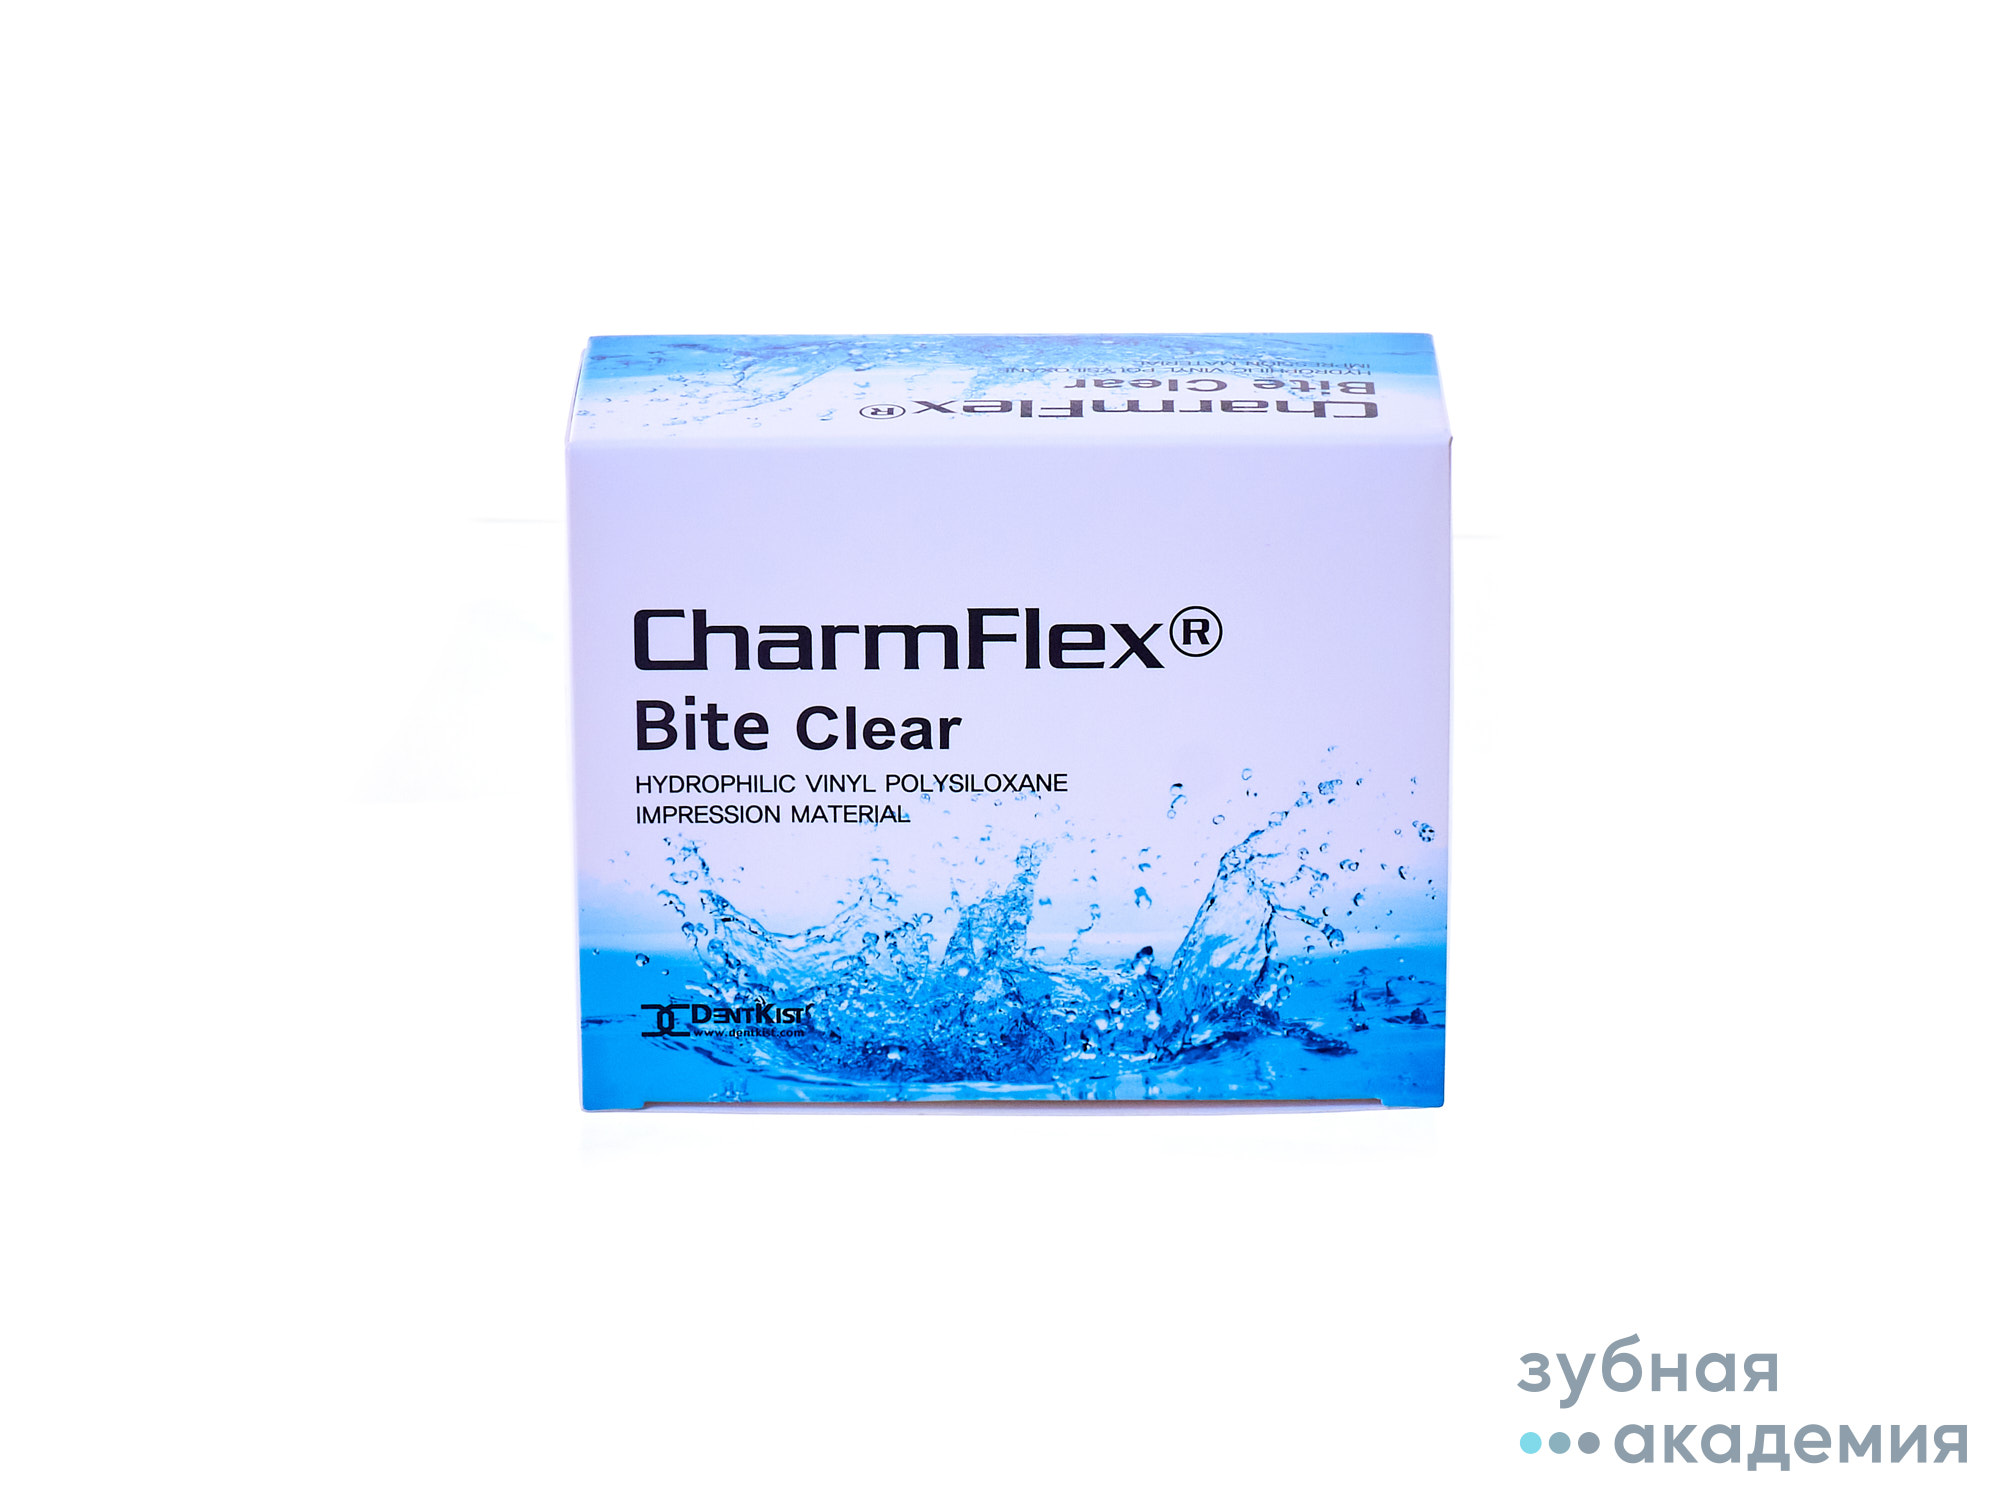 Charm Flex Bite Clear/ЧамФлекс Байт Клир упак 50мл*2+6 након/DentKist, Корея.